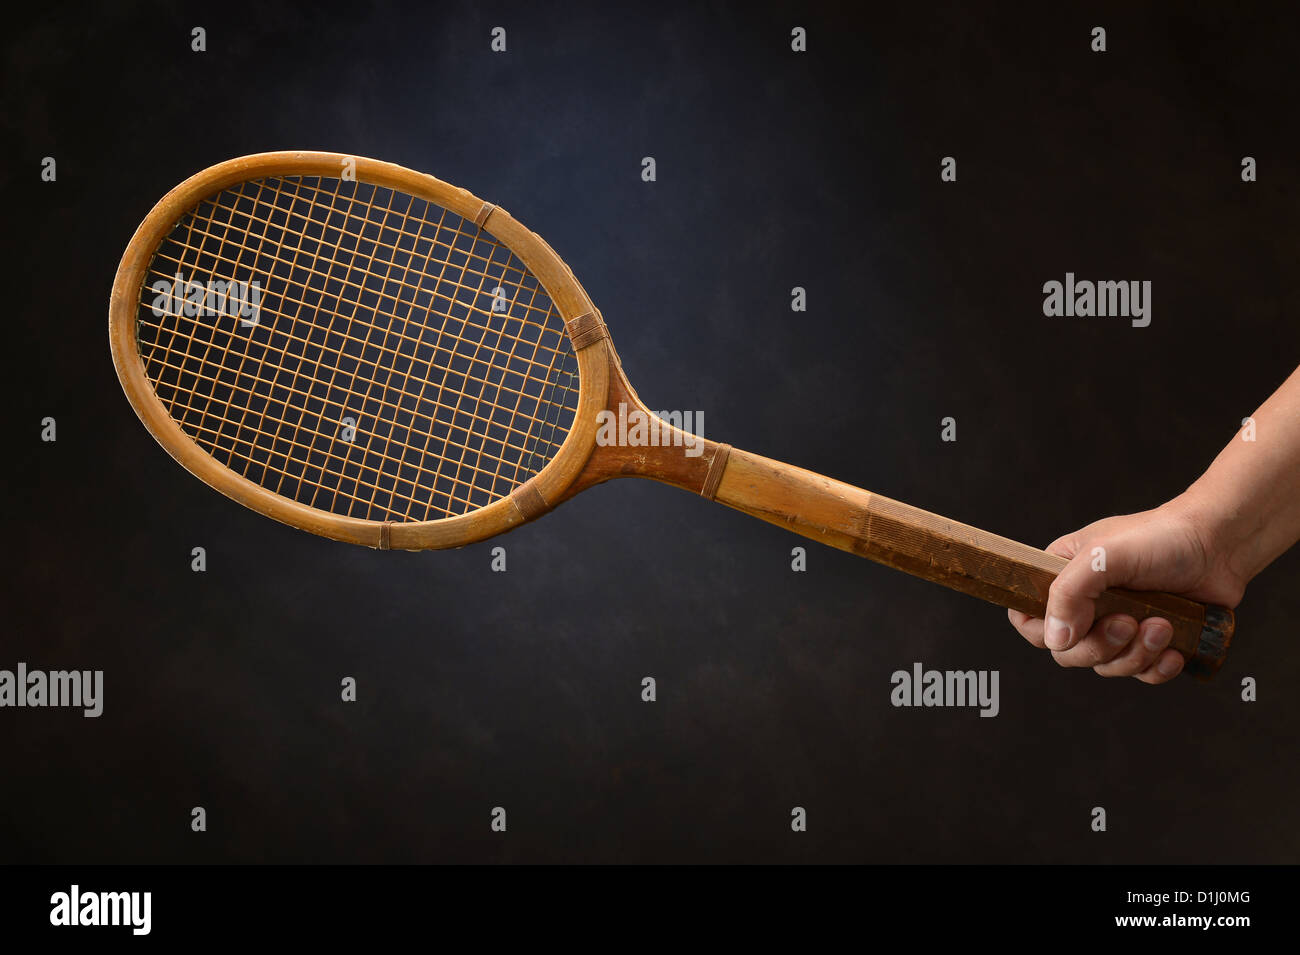 Man's hand holding vintage tennis racket over dark background Stock Photo